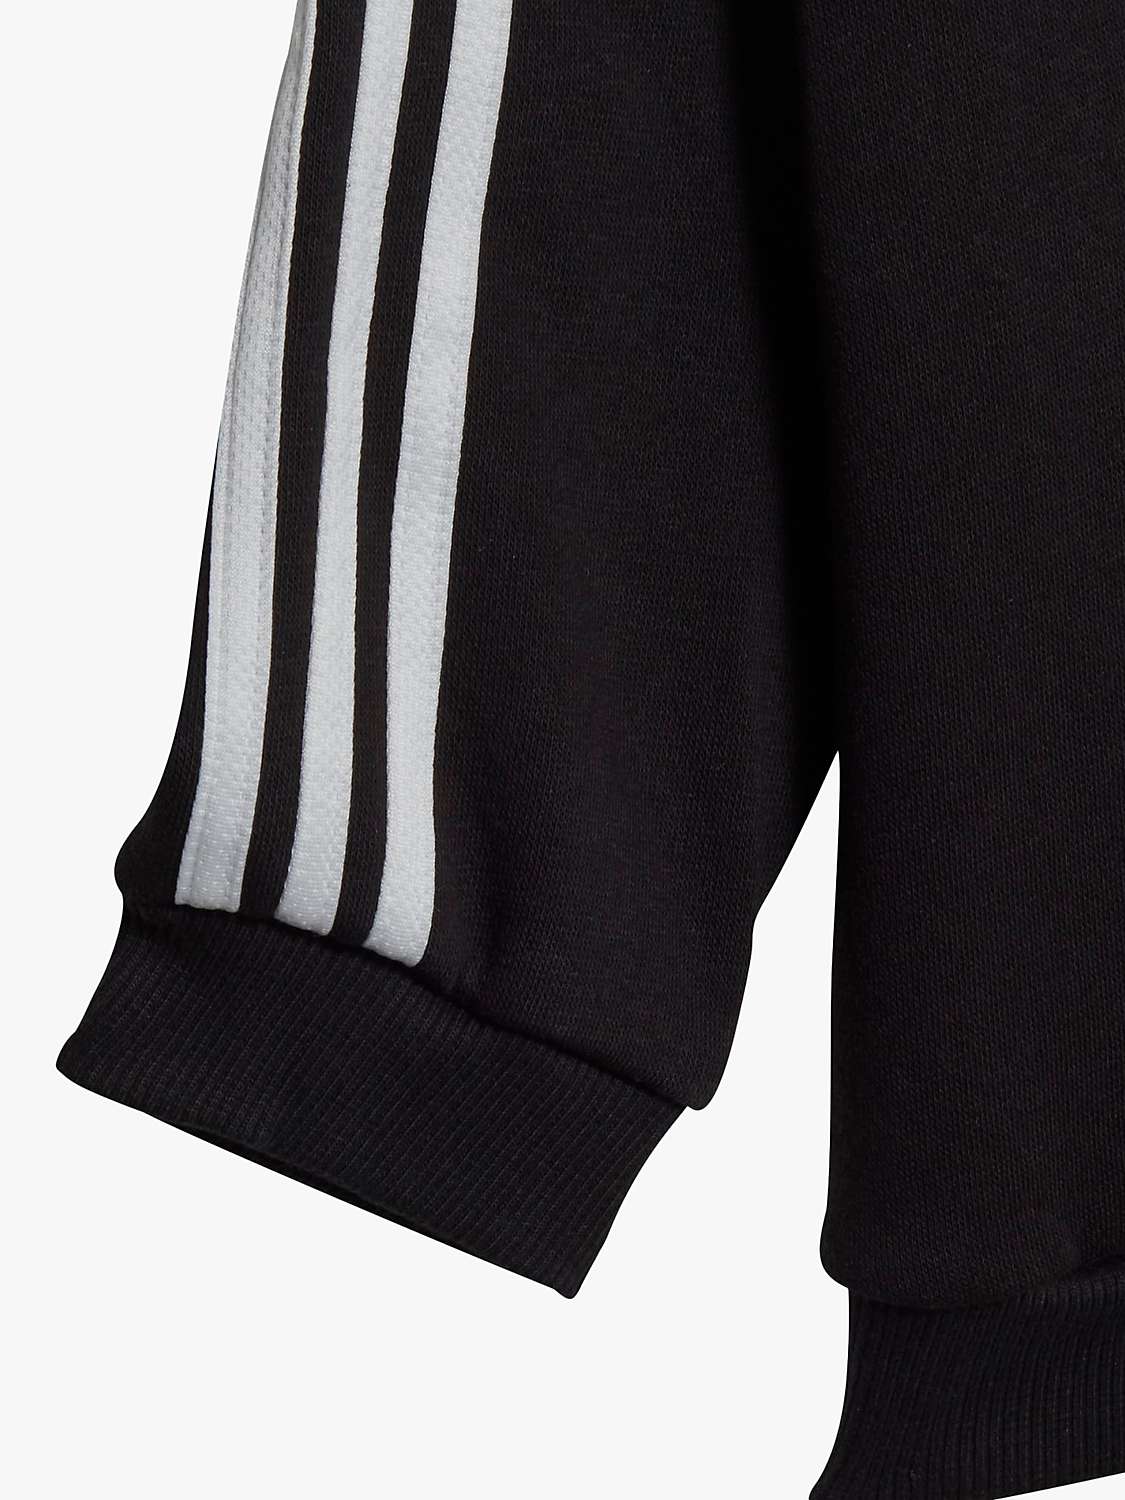 Buy adidas Baby Essentials Three Stripes Full Zip Hoodie & Joggers Set, Black/White Online at johnlewis.com